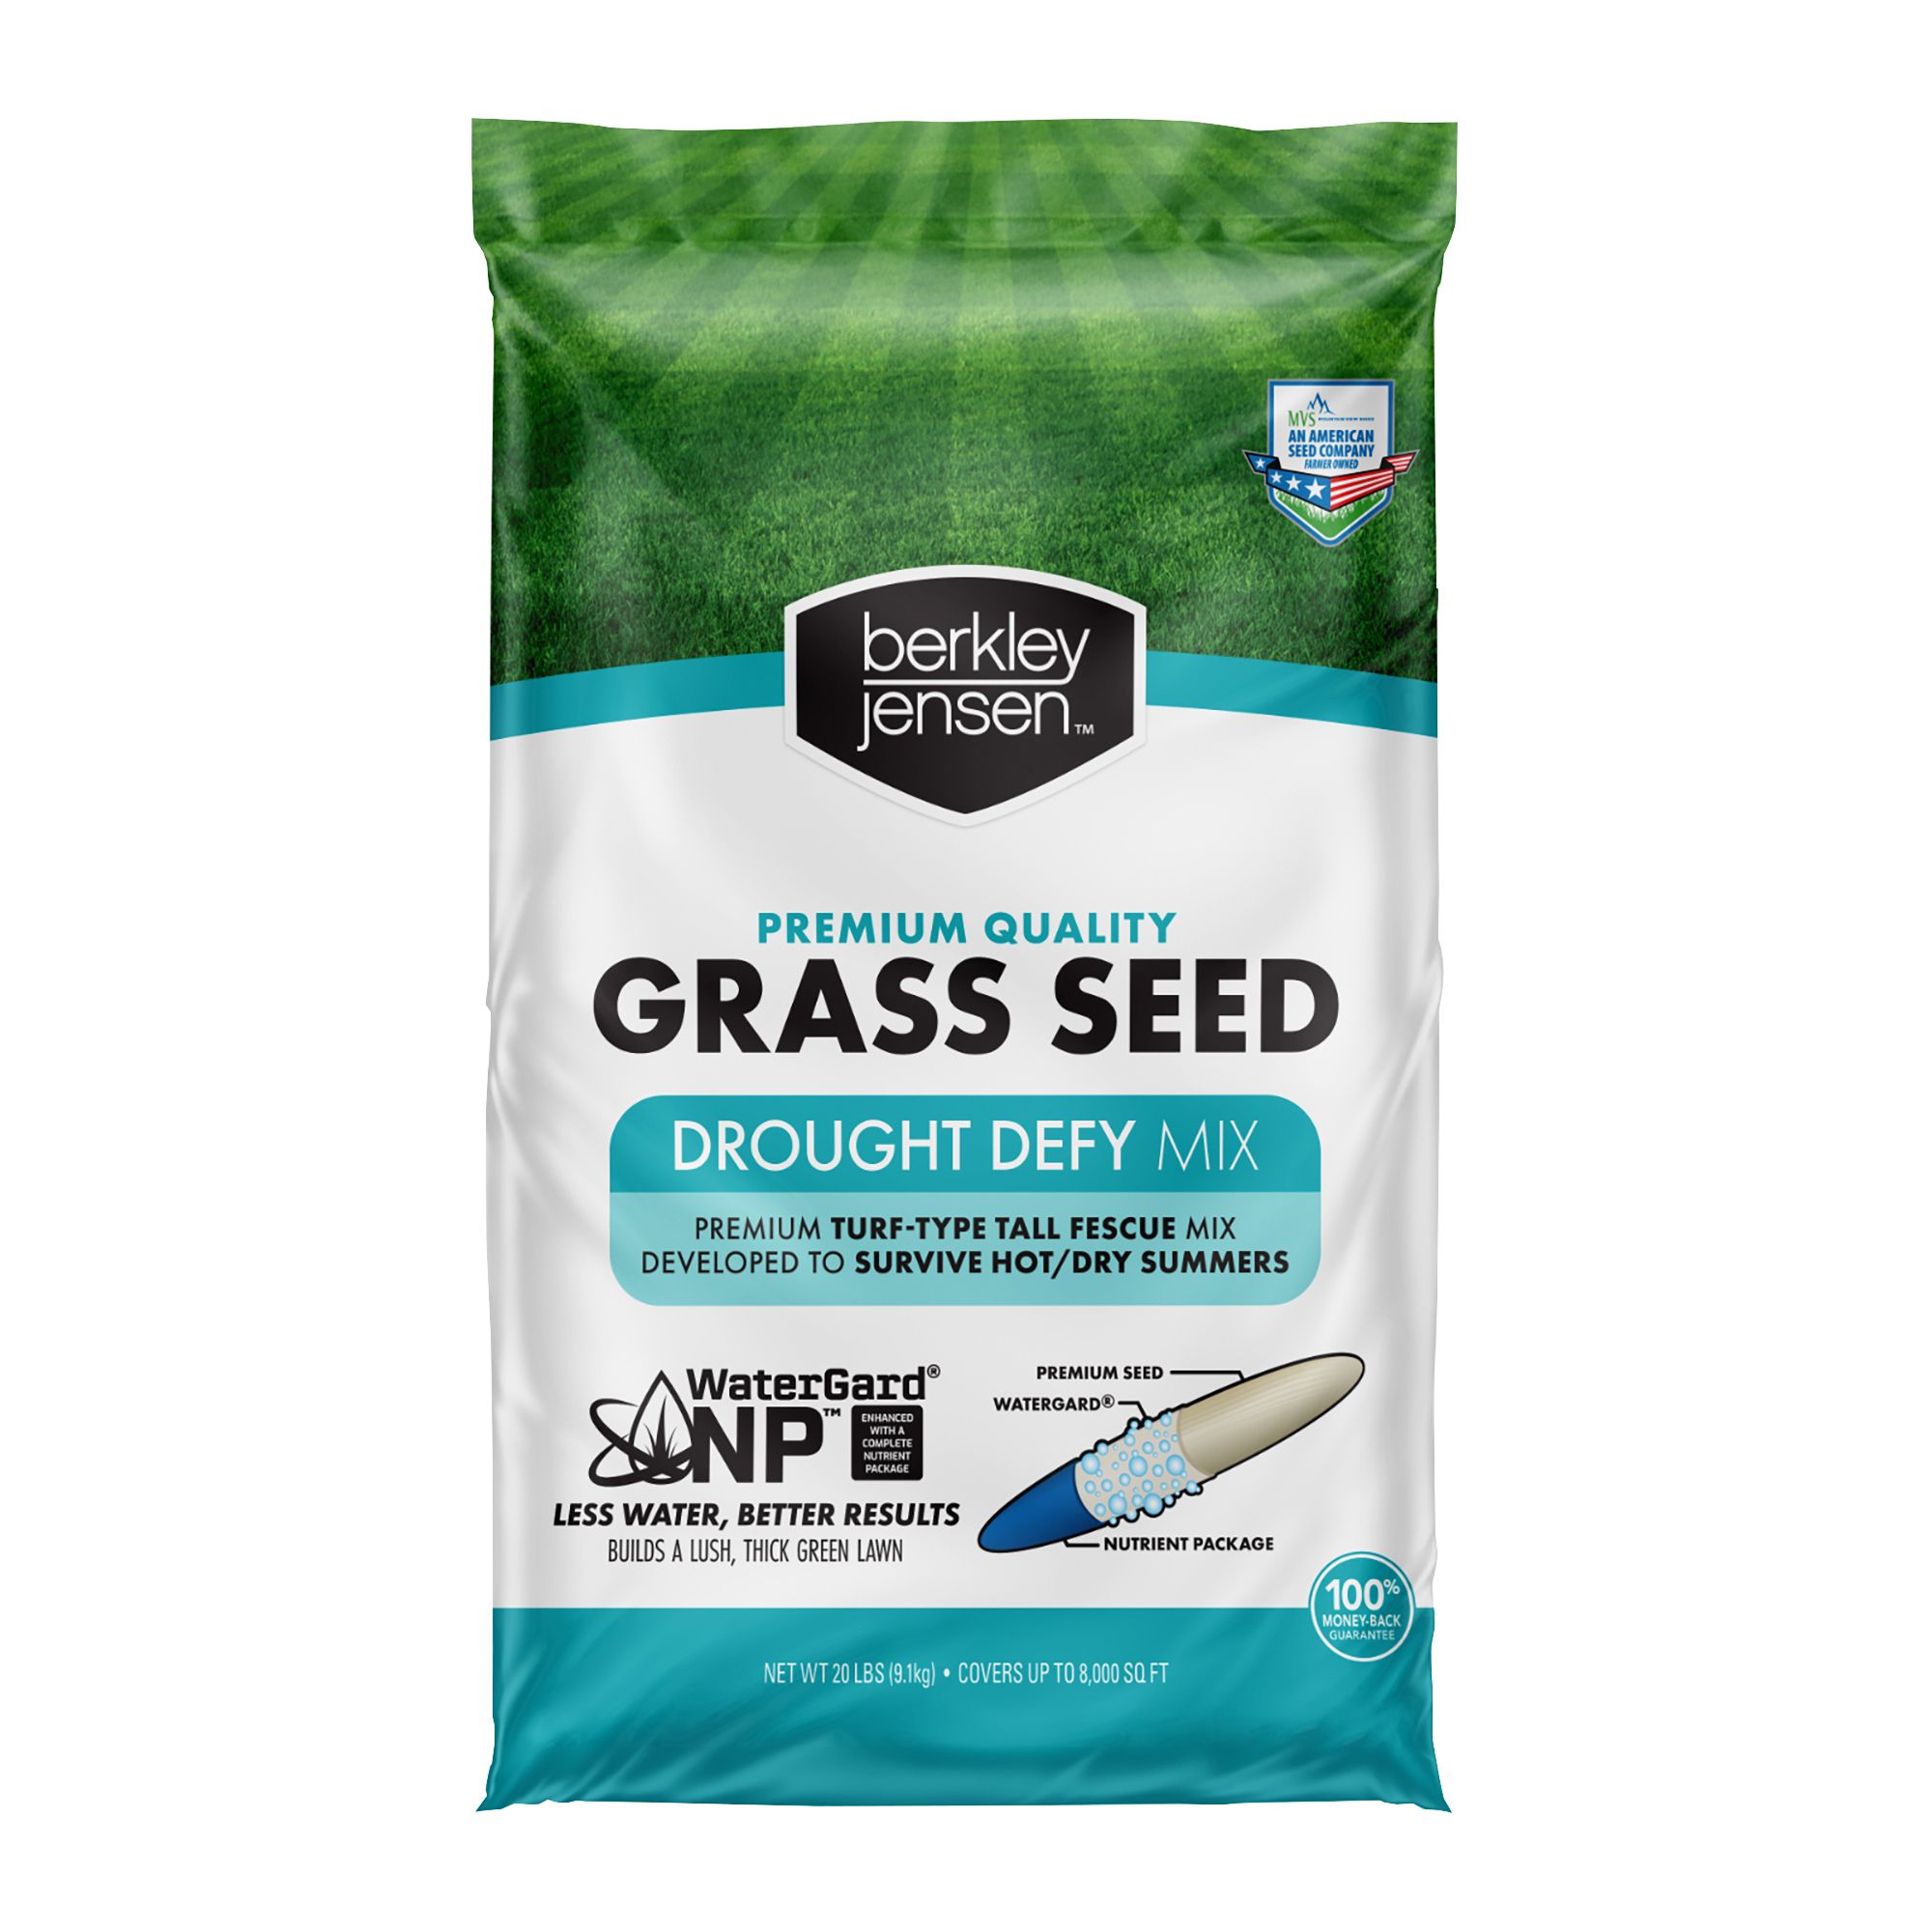 Berkley Jensen Drought Defy Premium Seed Mix, 20 lbs.